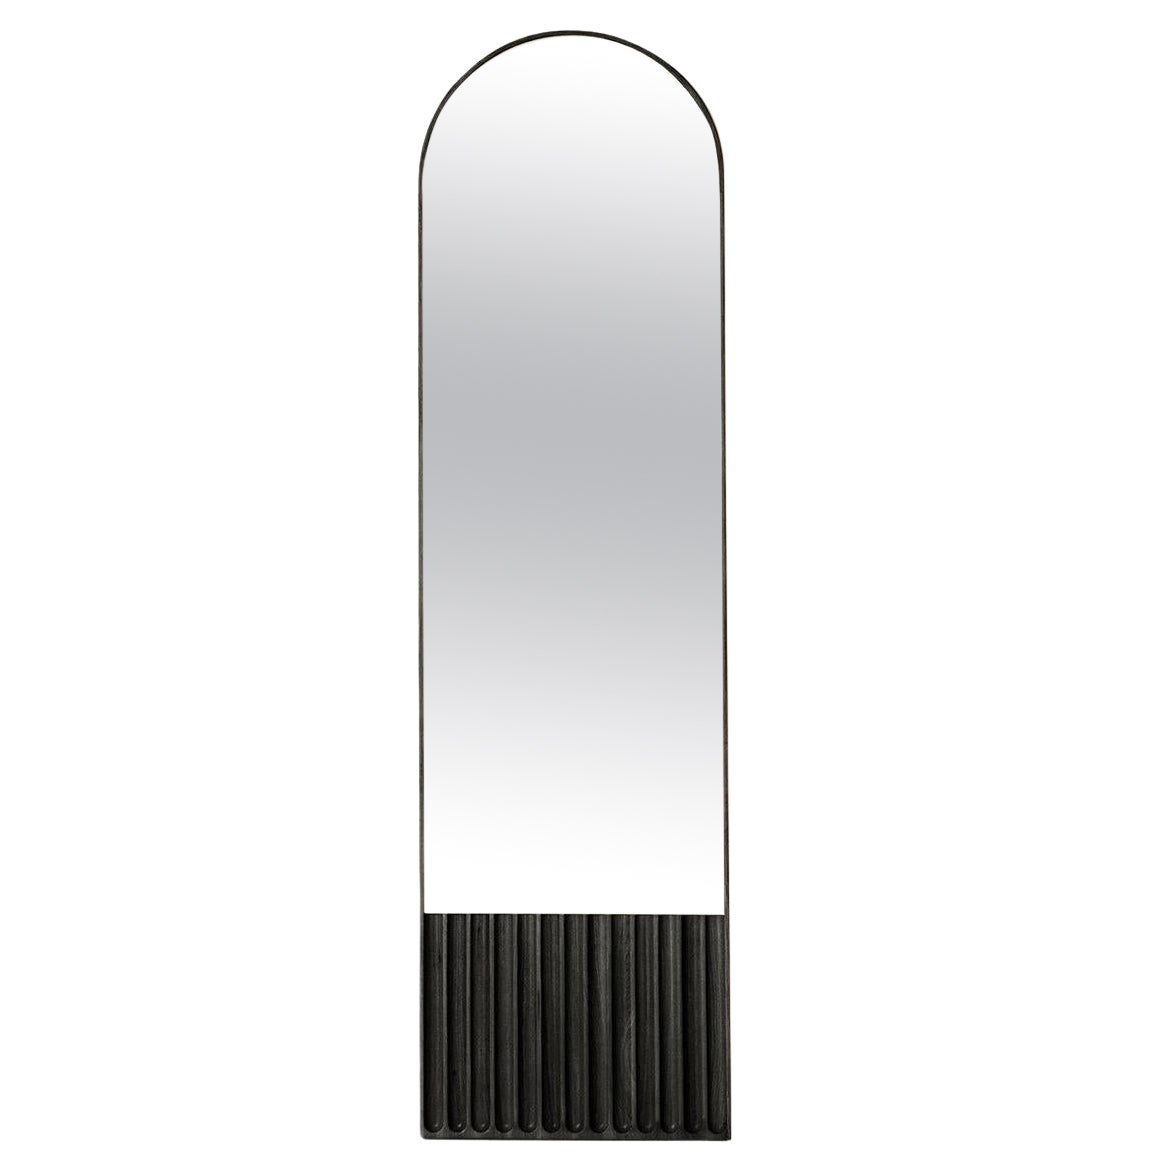 Miroir ovale Tutto Sesto en bois massif, finition en frêne noir, contemporain en vente